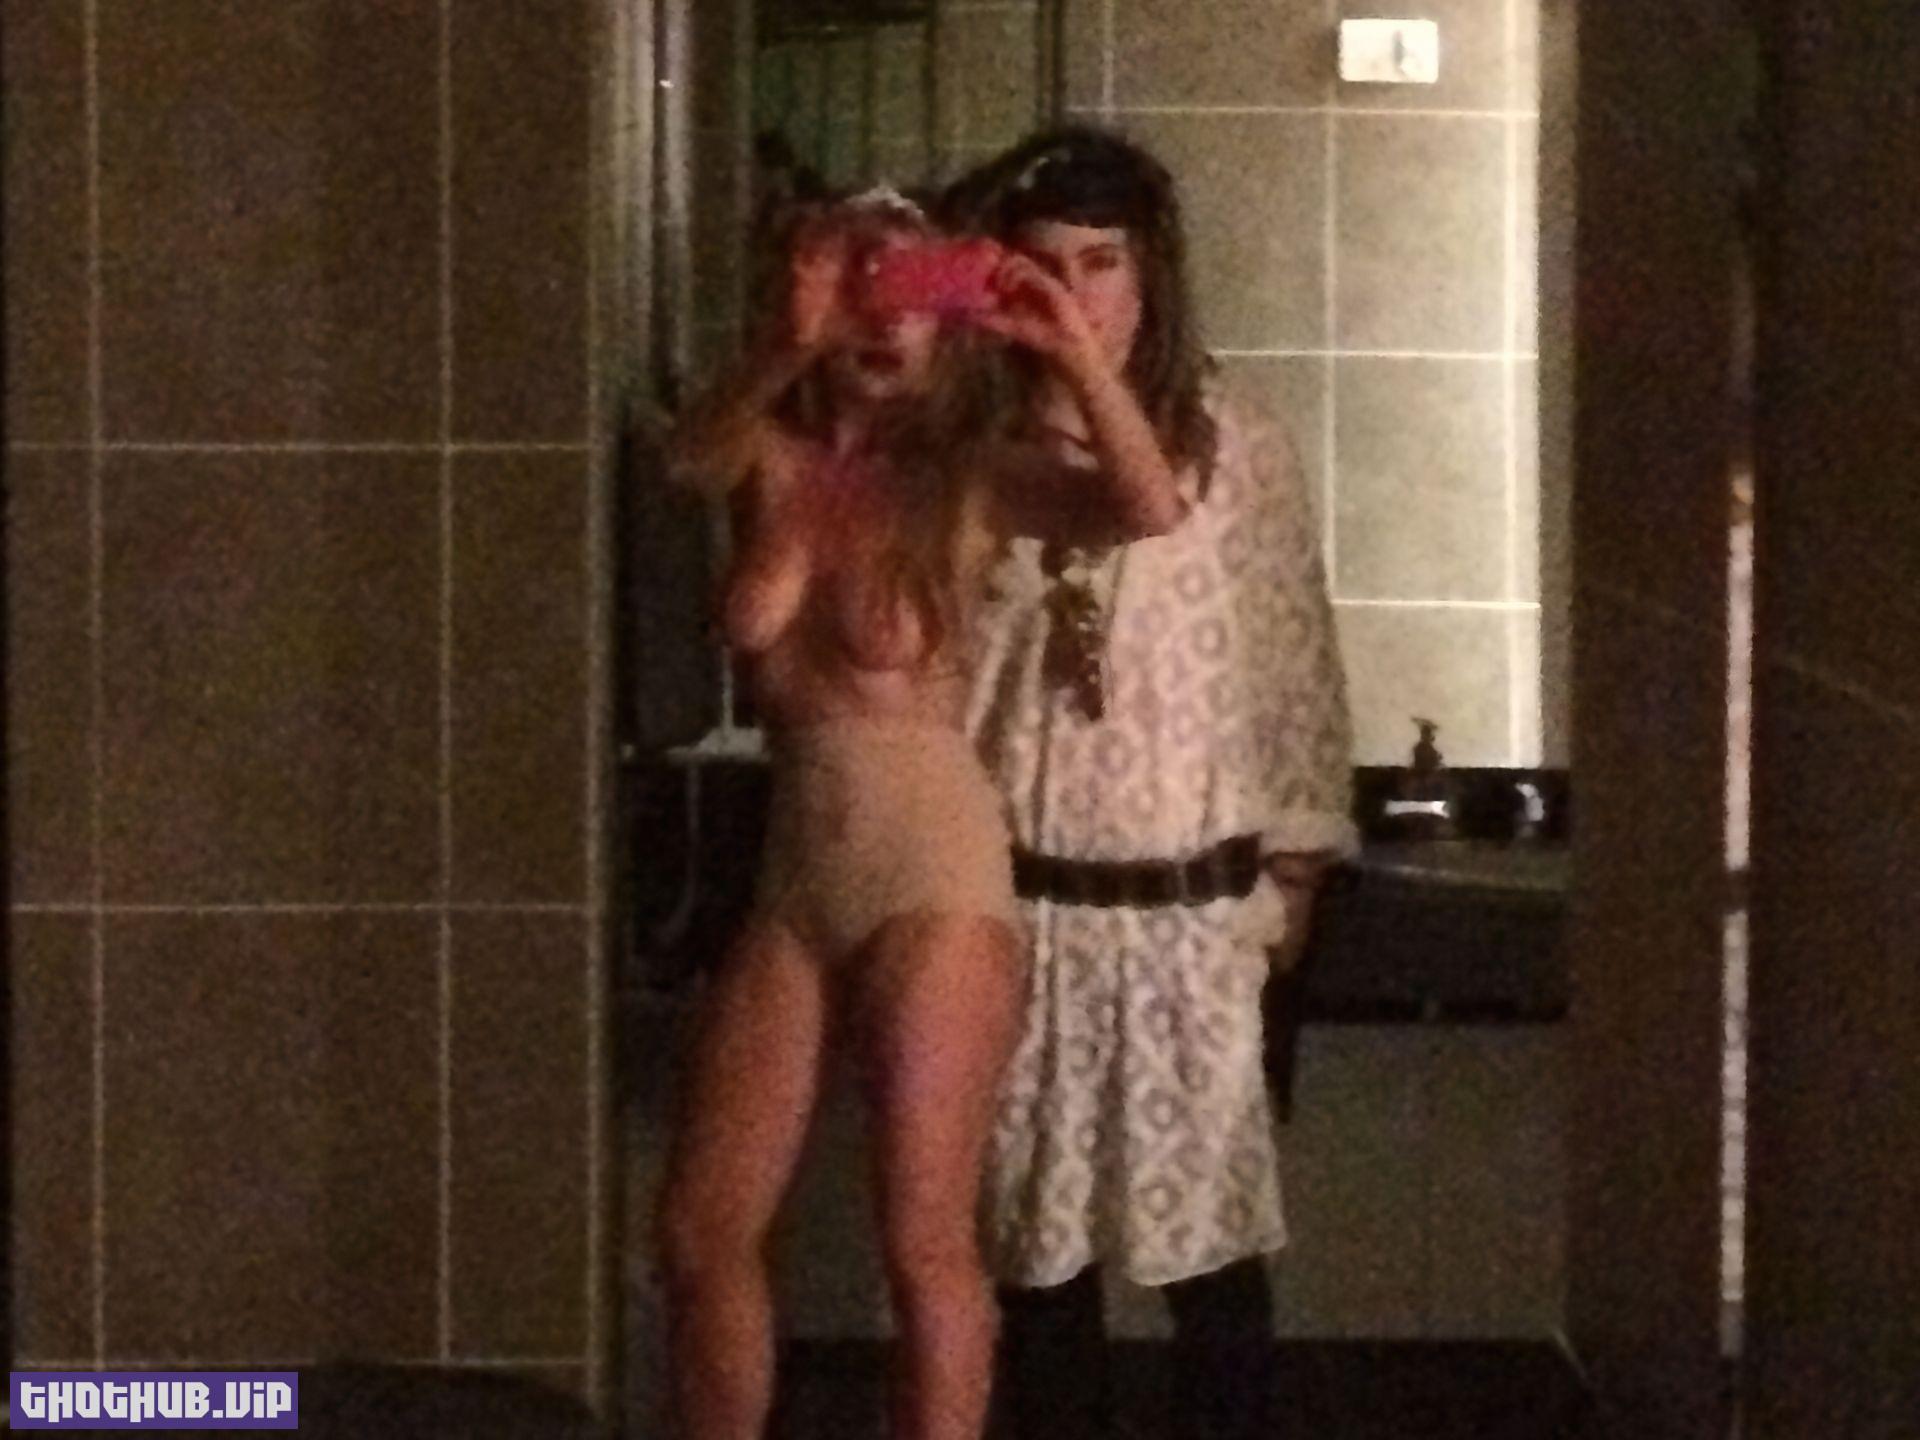 1701067045 825 Aliana Lohan And Lindsay Lohan Leaked 14 Photos